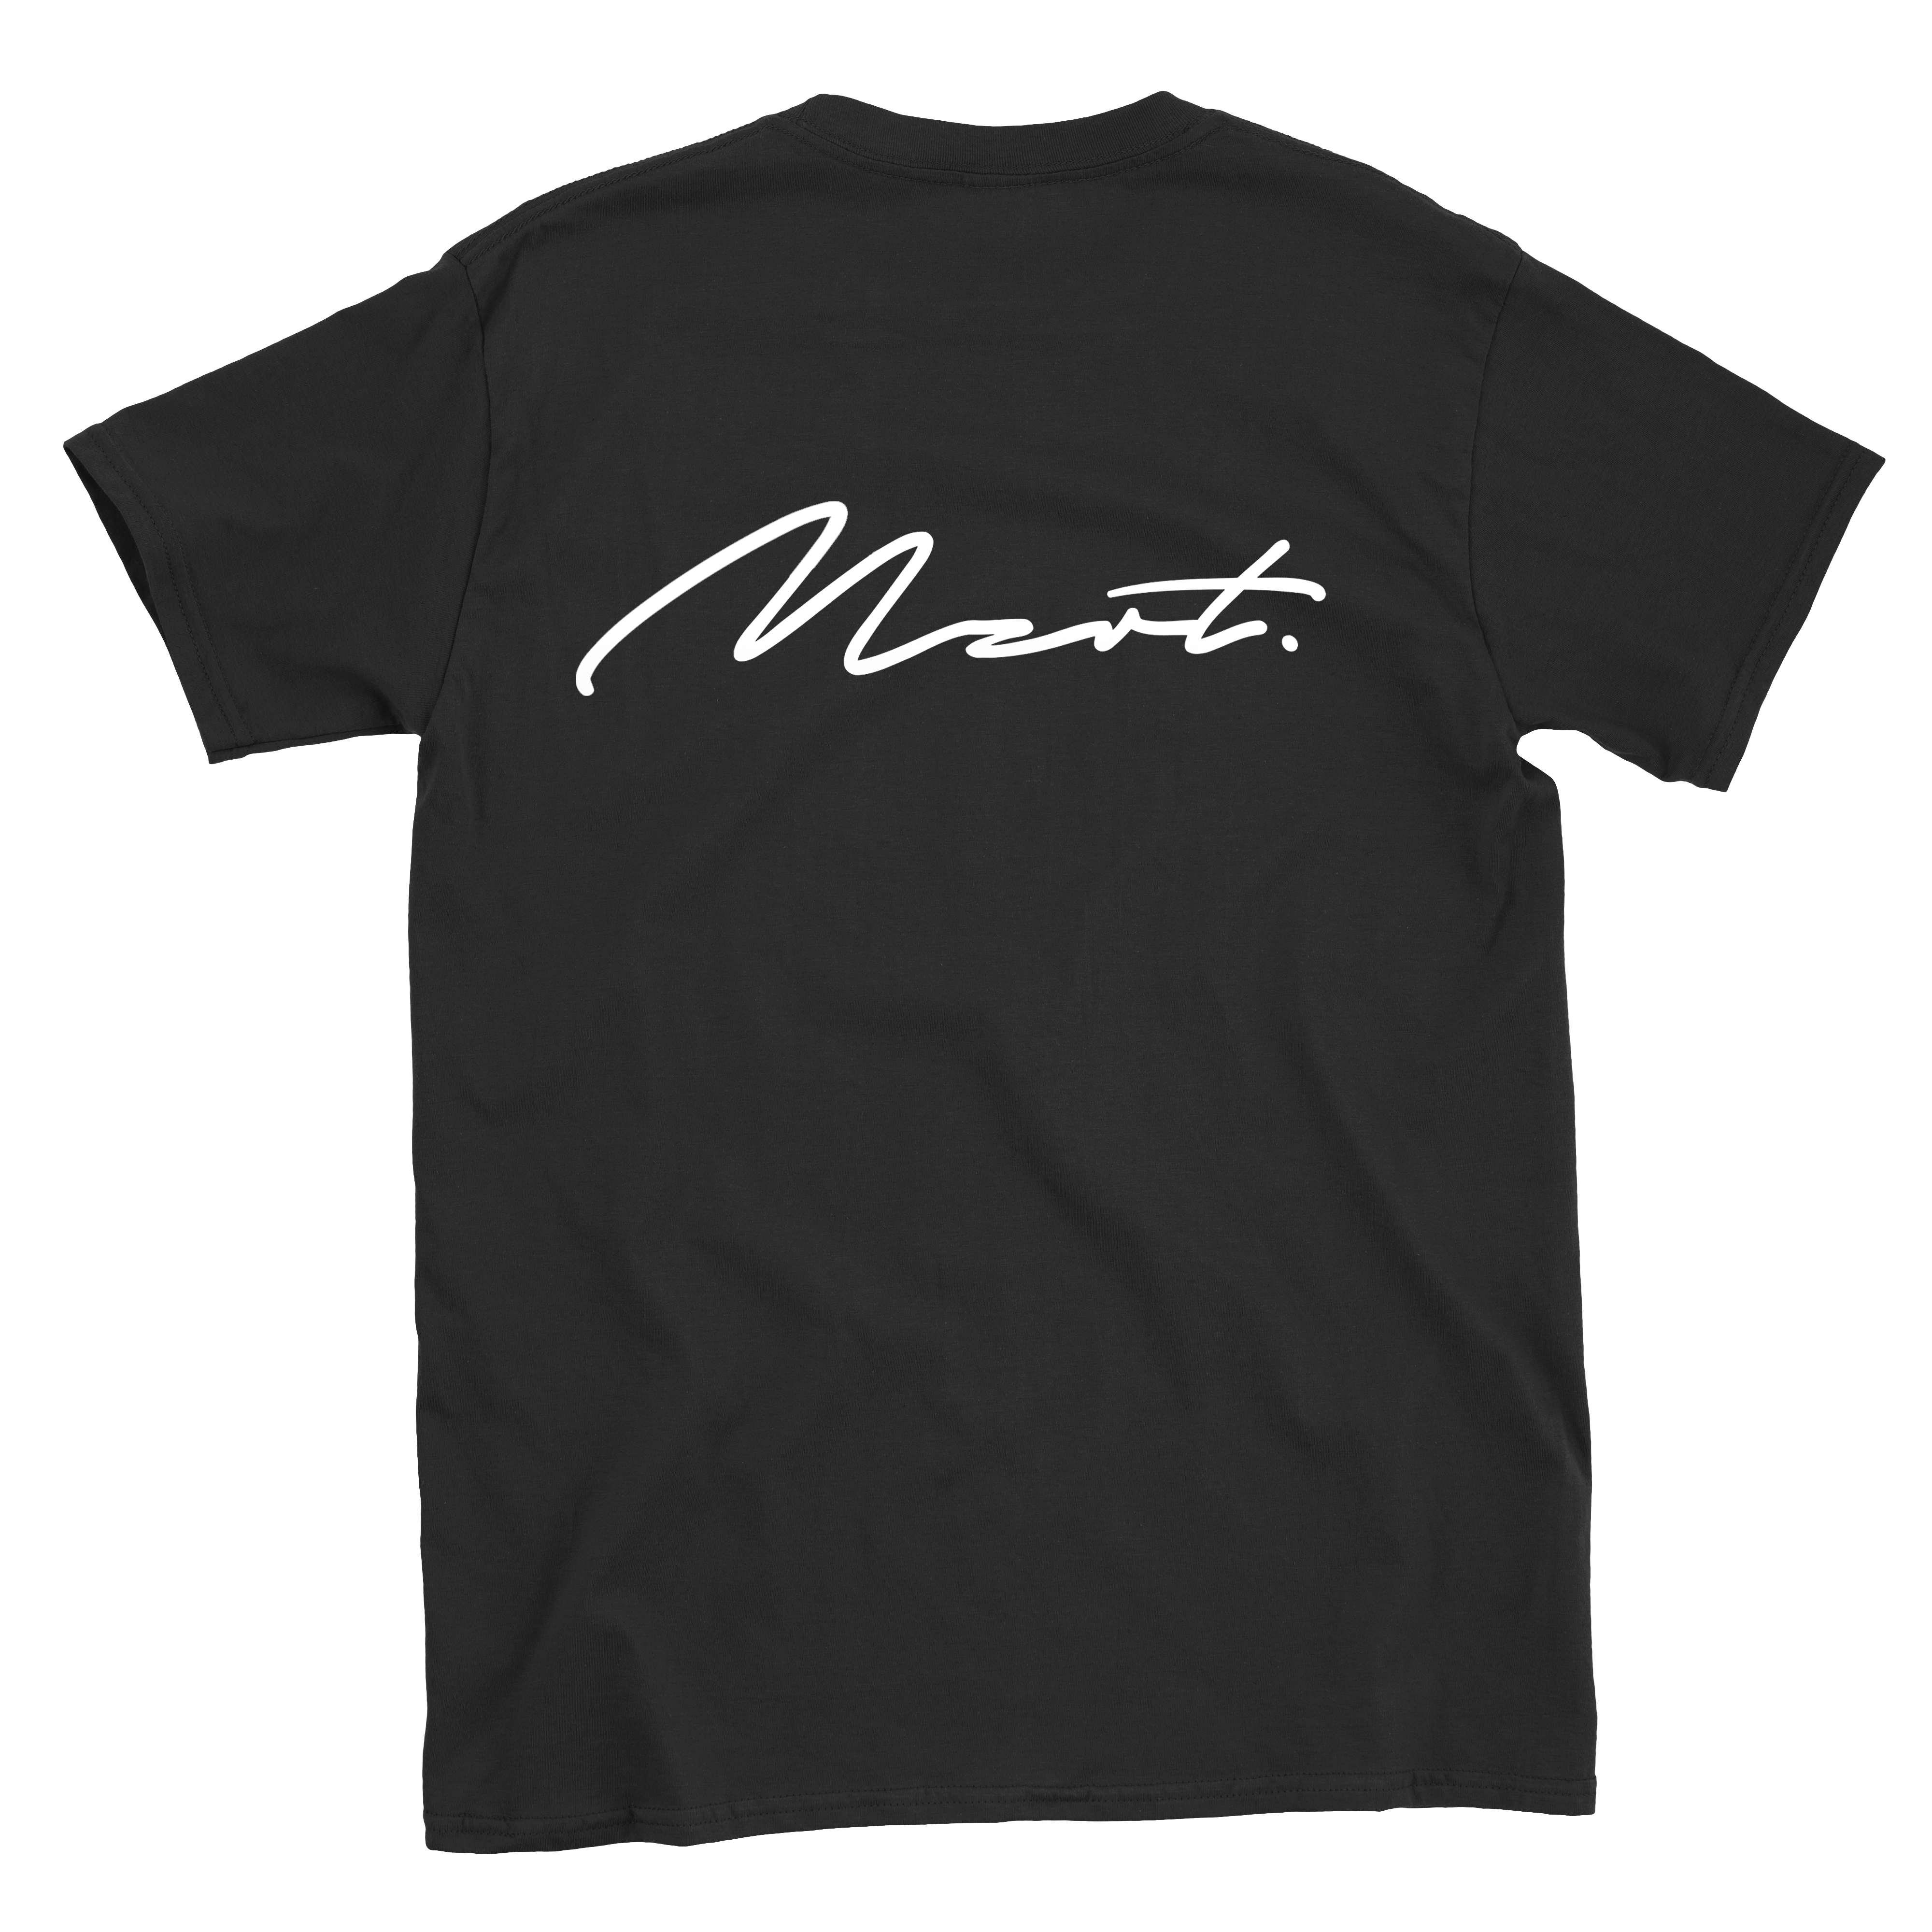 Signature 'MZRT' T-Shirt